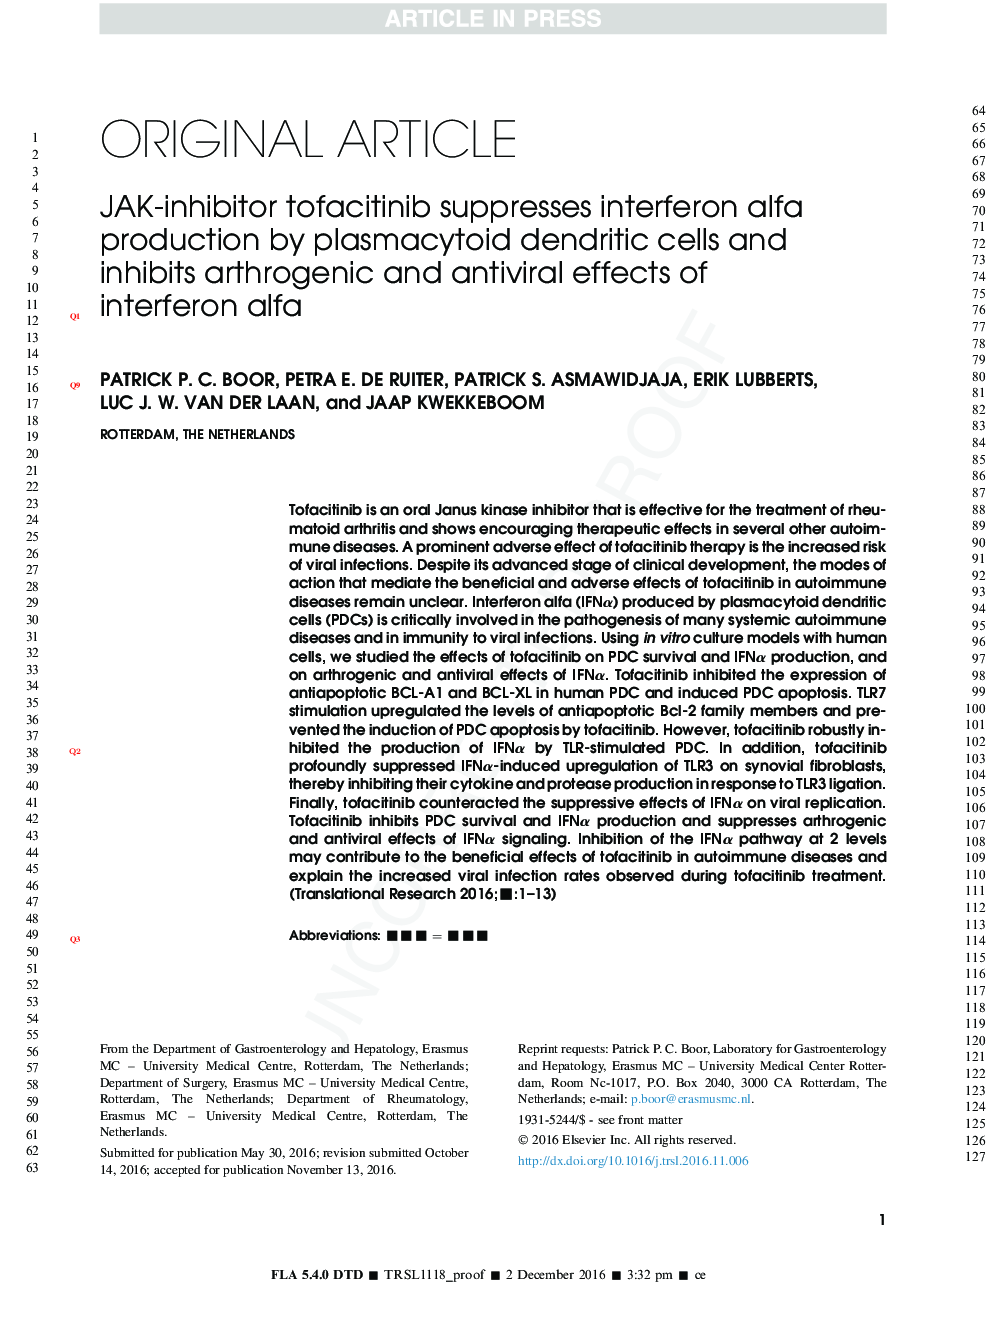 JAK-inhibitor tofacitinib suppresses interferon alfa production by plasmacytoid dendritic cells and inhibits arthrogenic and antiviral effects of interferon alfa